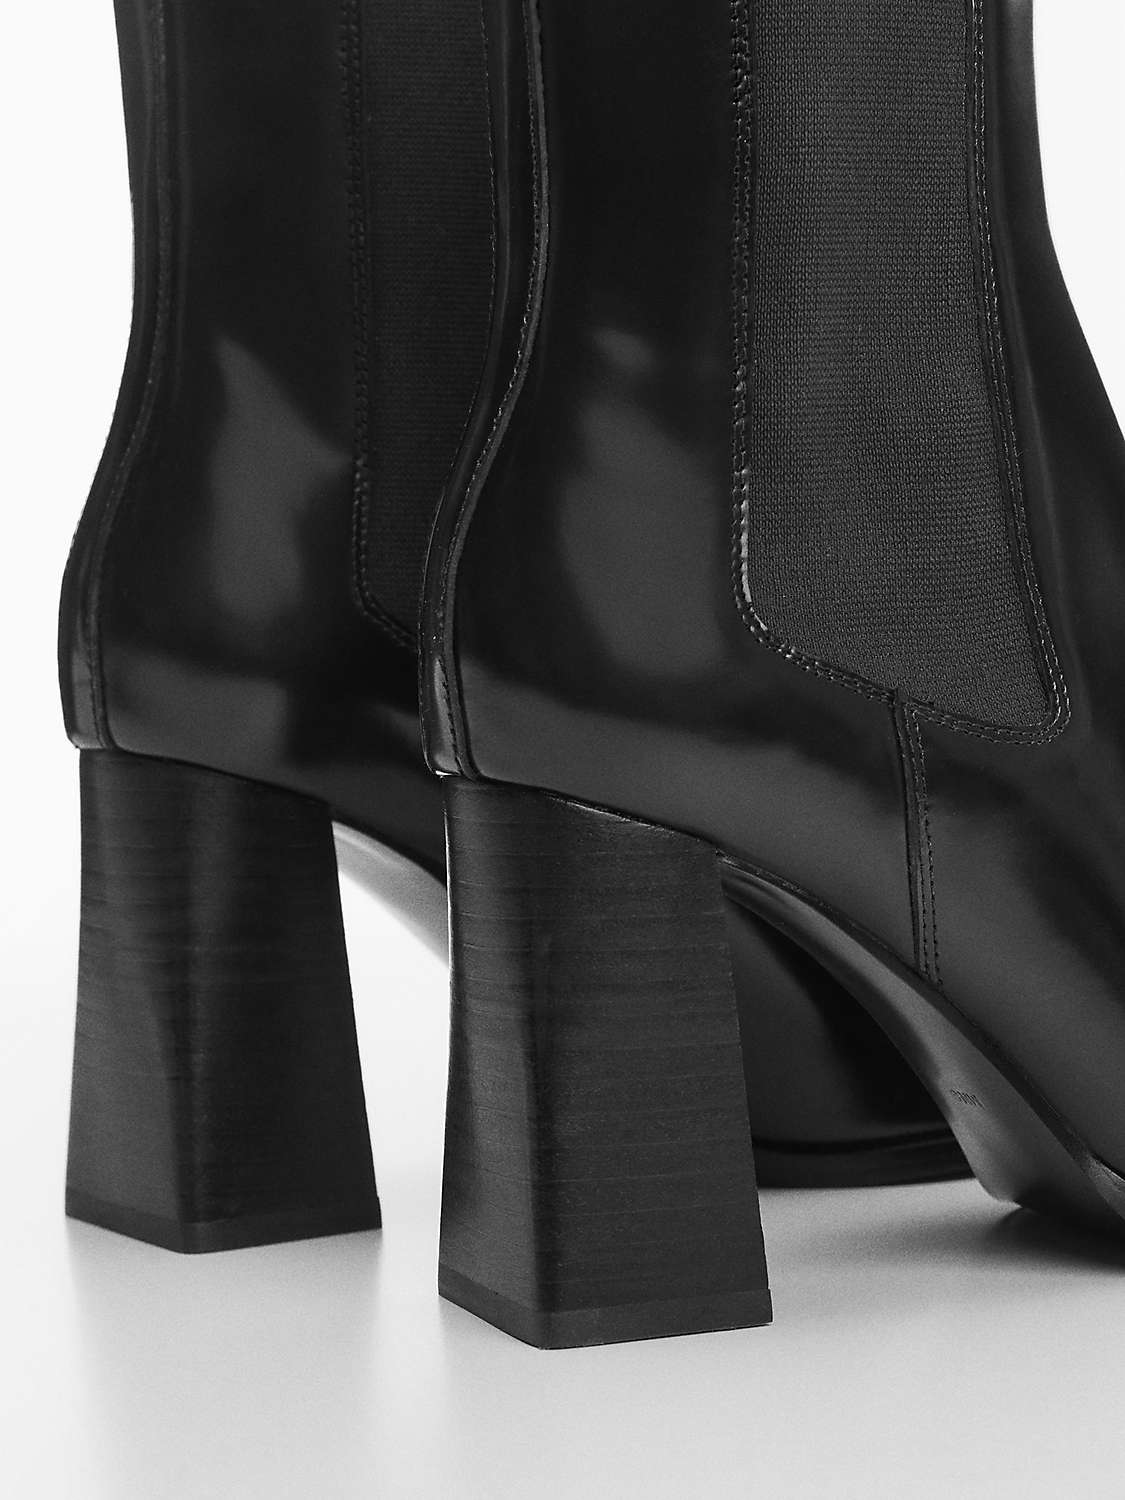 Buy Mango Subte Leather Block Heel Ankle Boots, Black Online at johnlewis.com